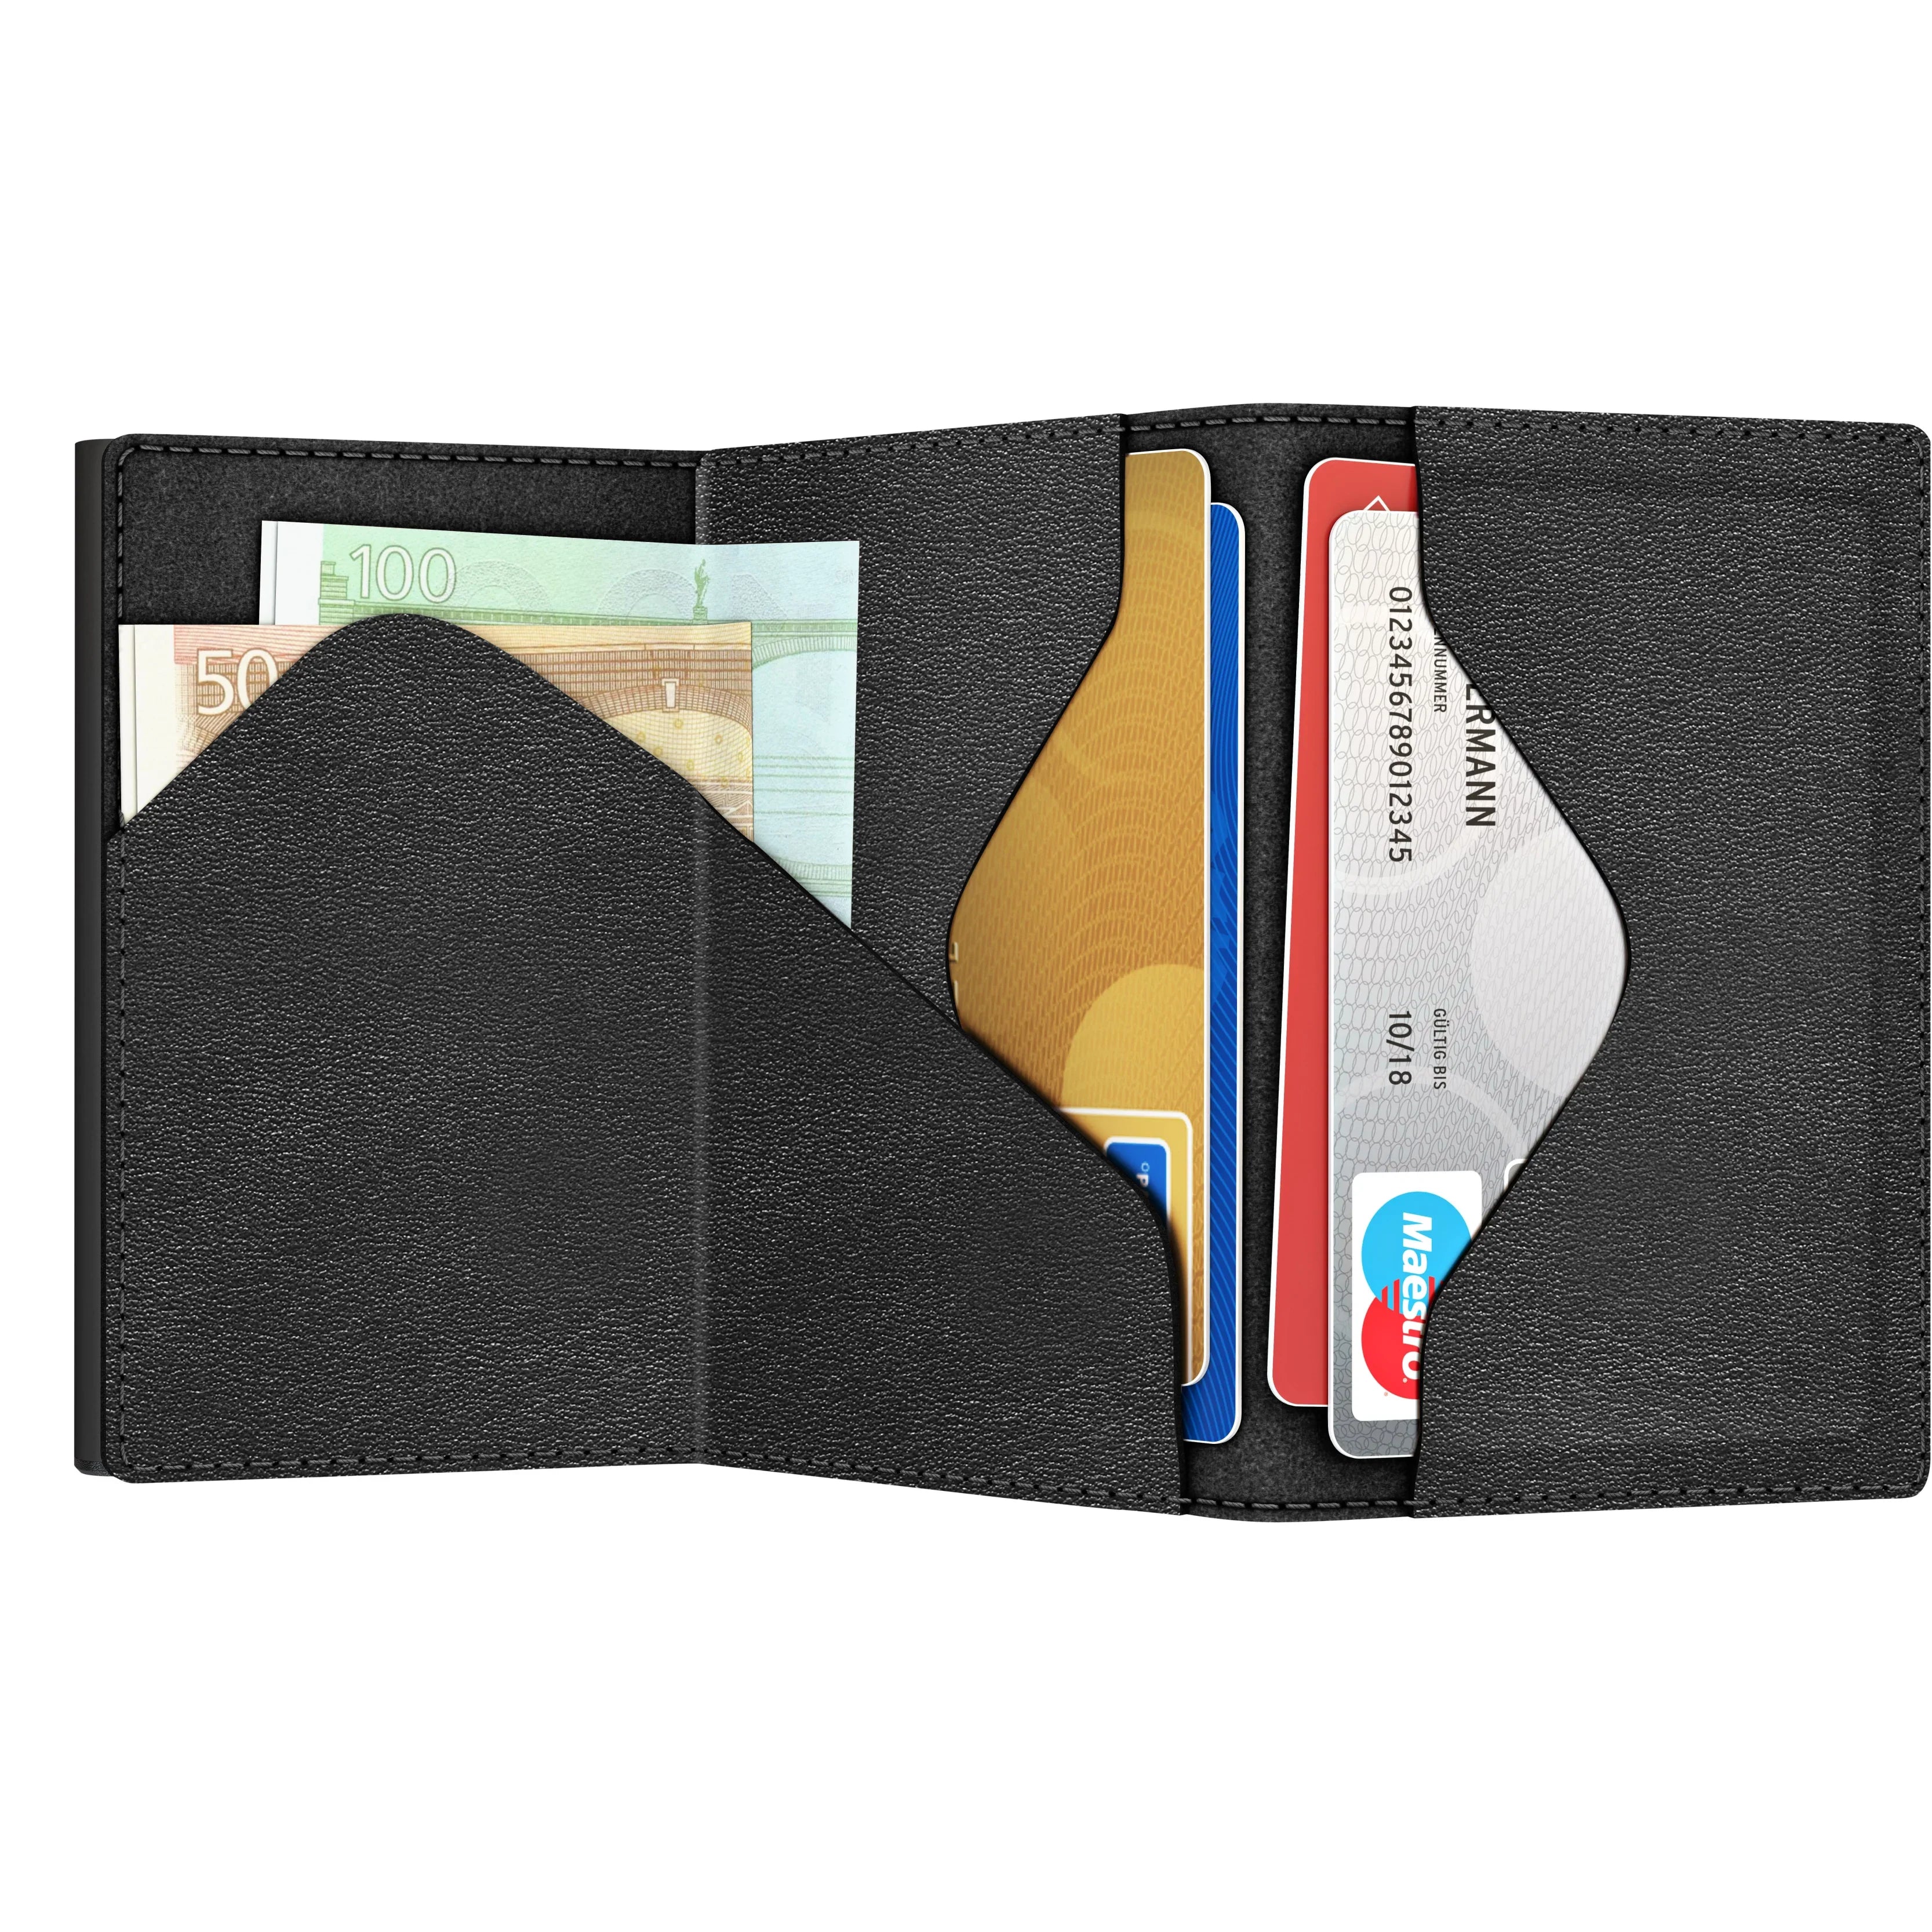 Tru Virtu Sleek Edition Click & Slide Nappa Wallet 10 cm - Brown-Silver